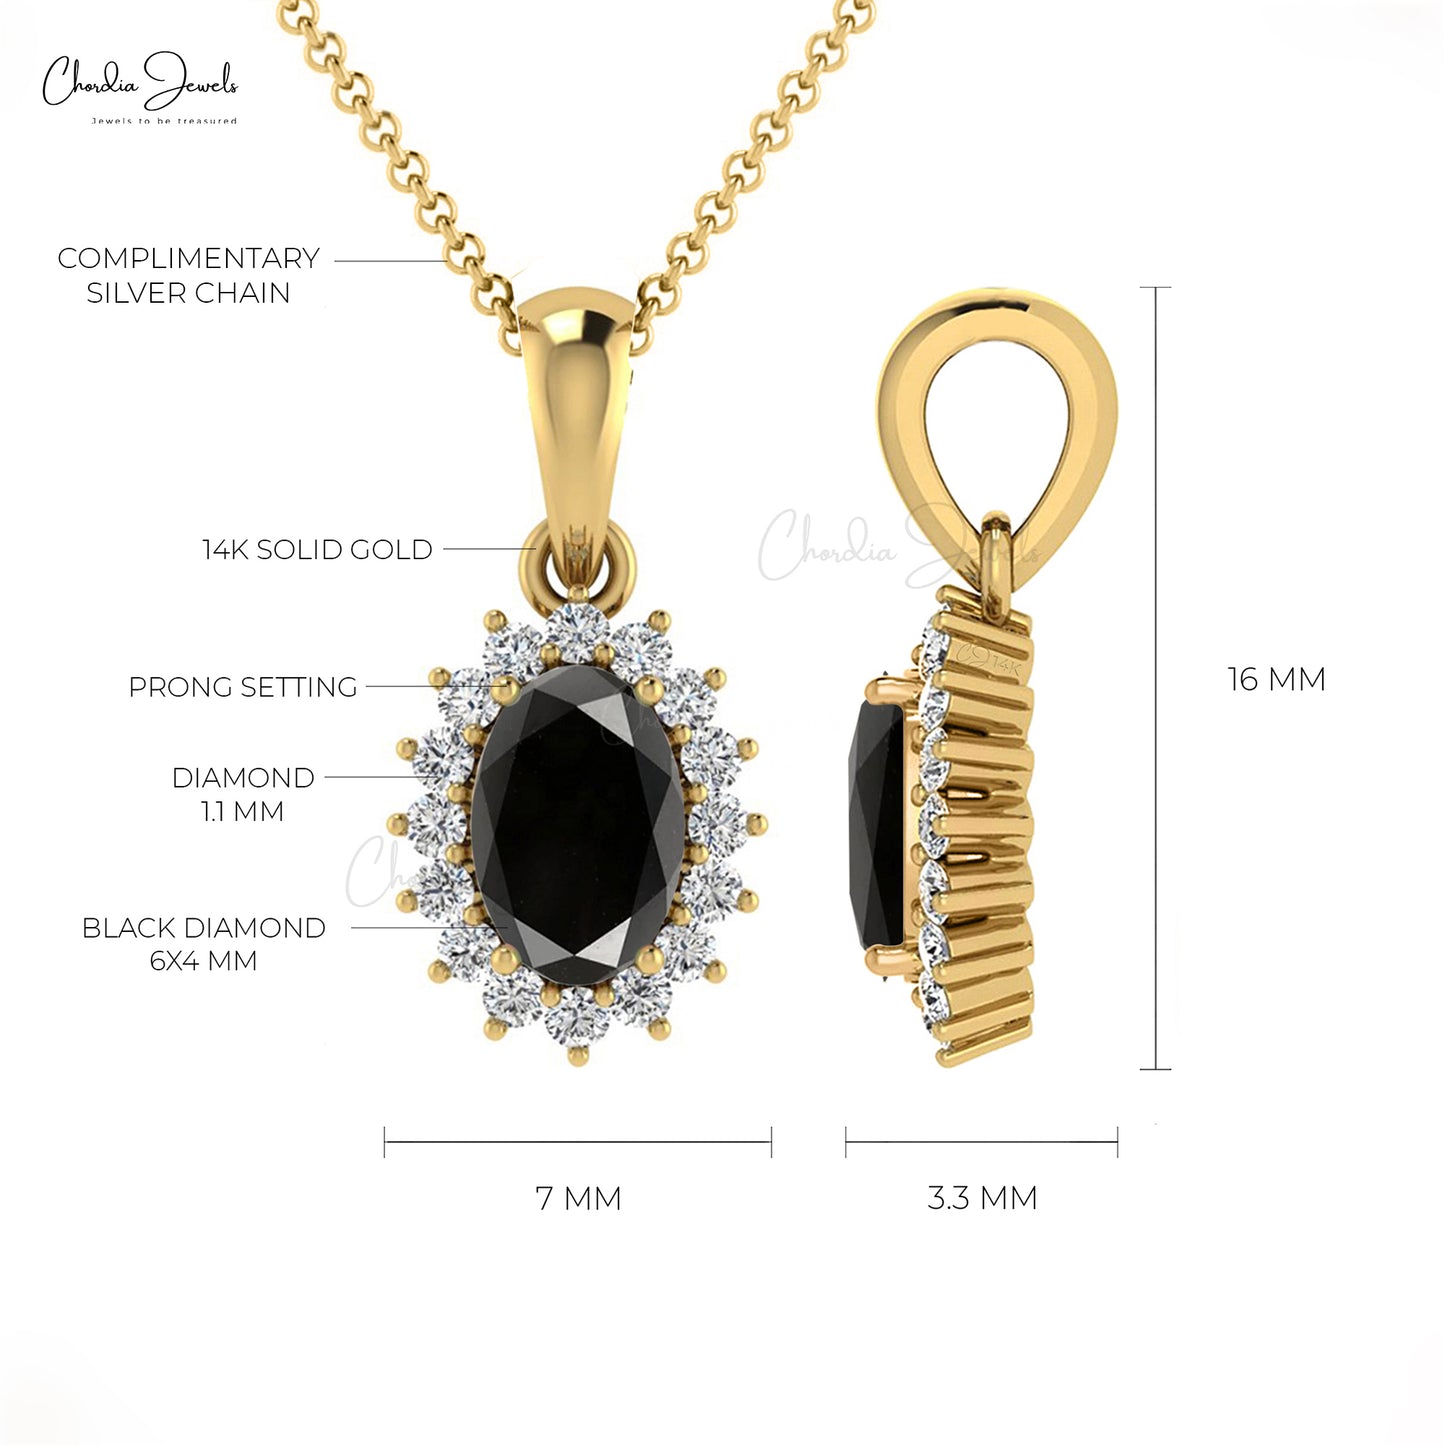 Elegant Black Diamond Dainty Halo Pendant 6x4mm Oval Cut Prong Set Bridal Pendant Genuine 14k Real Gold Hallmarked Jewelry For Gift